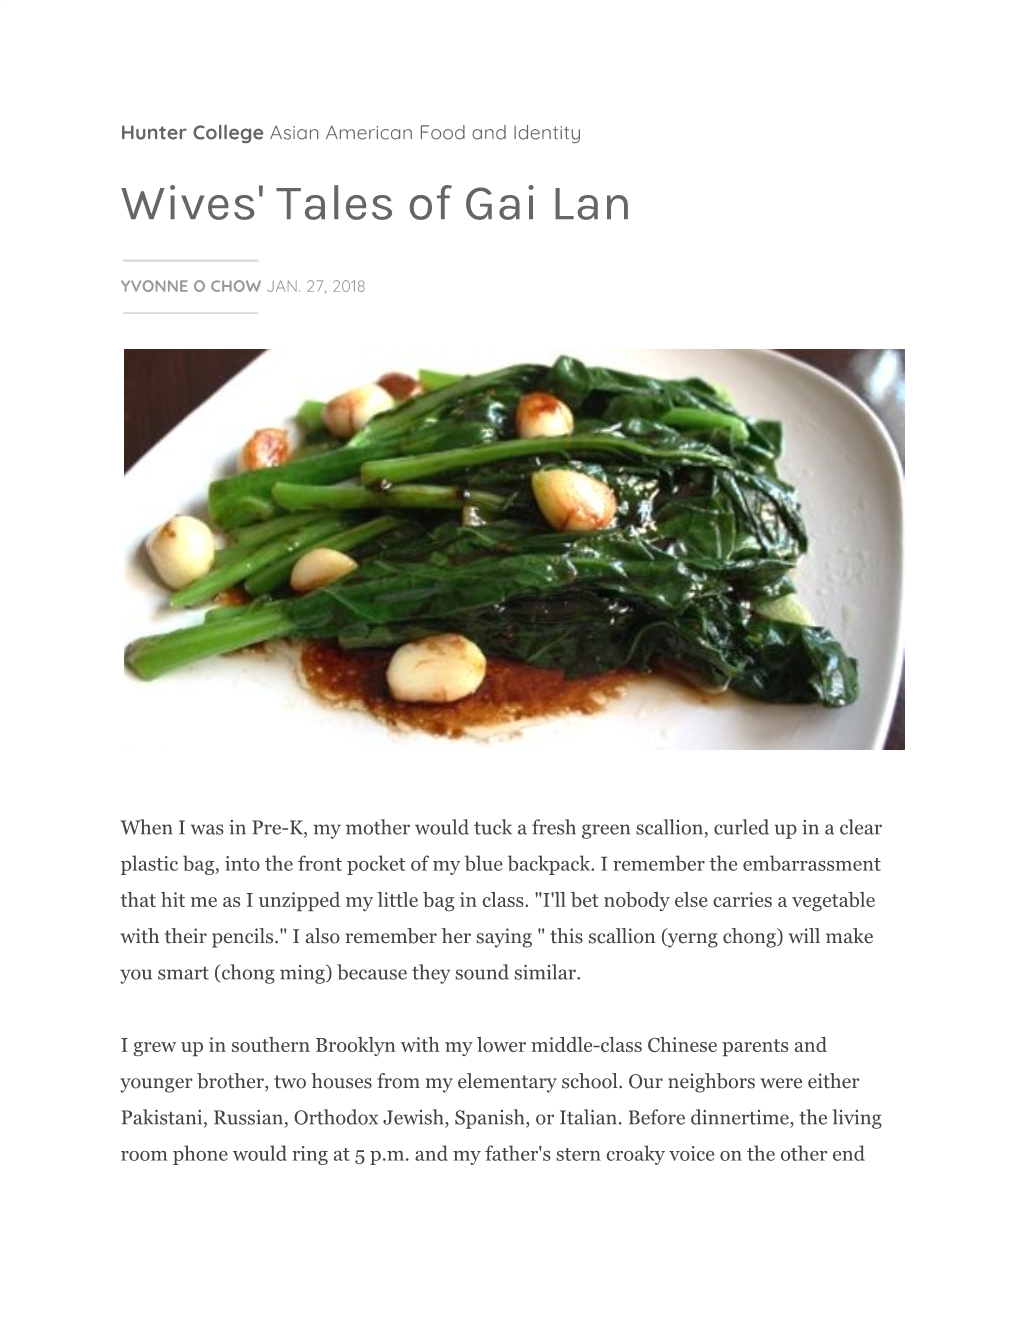 Wives' Tales of Gai Lan